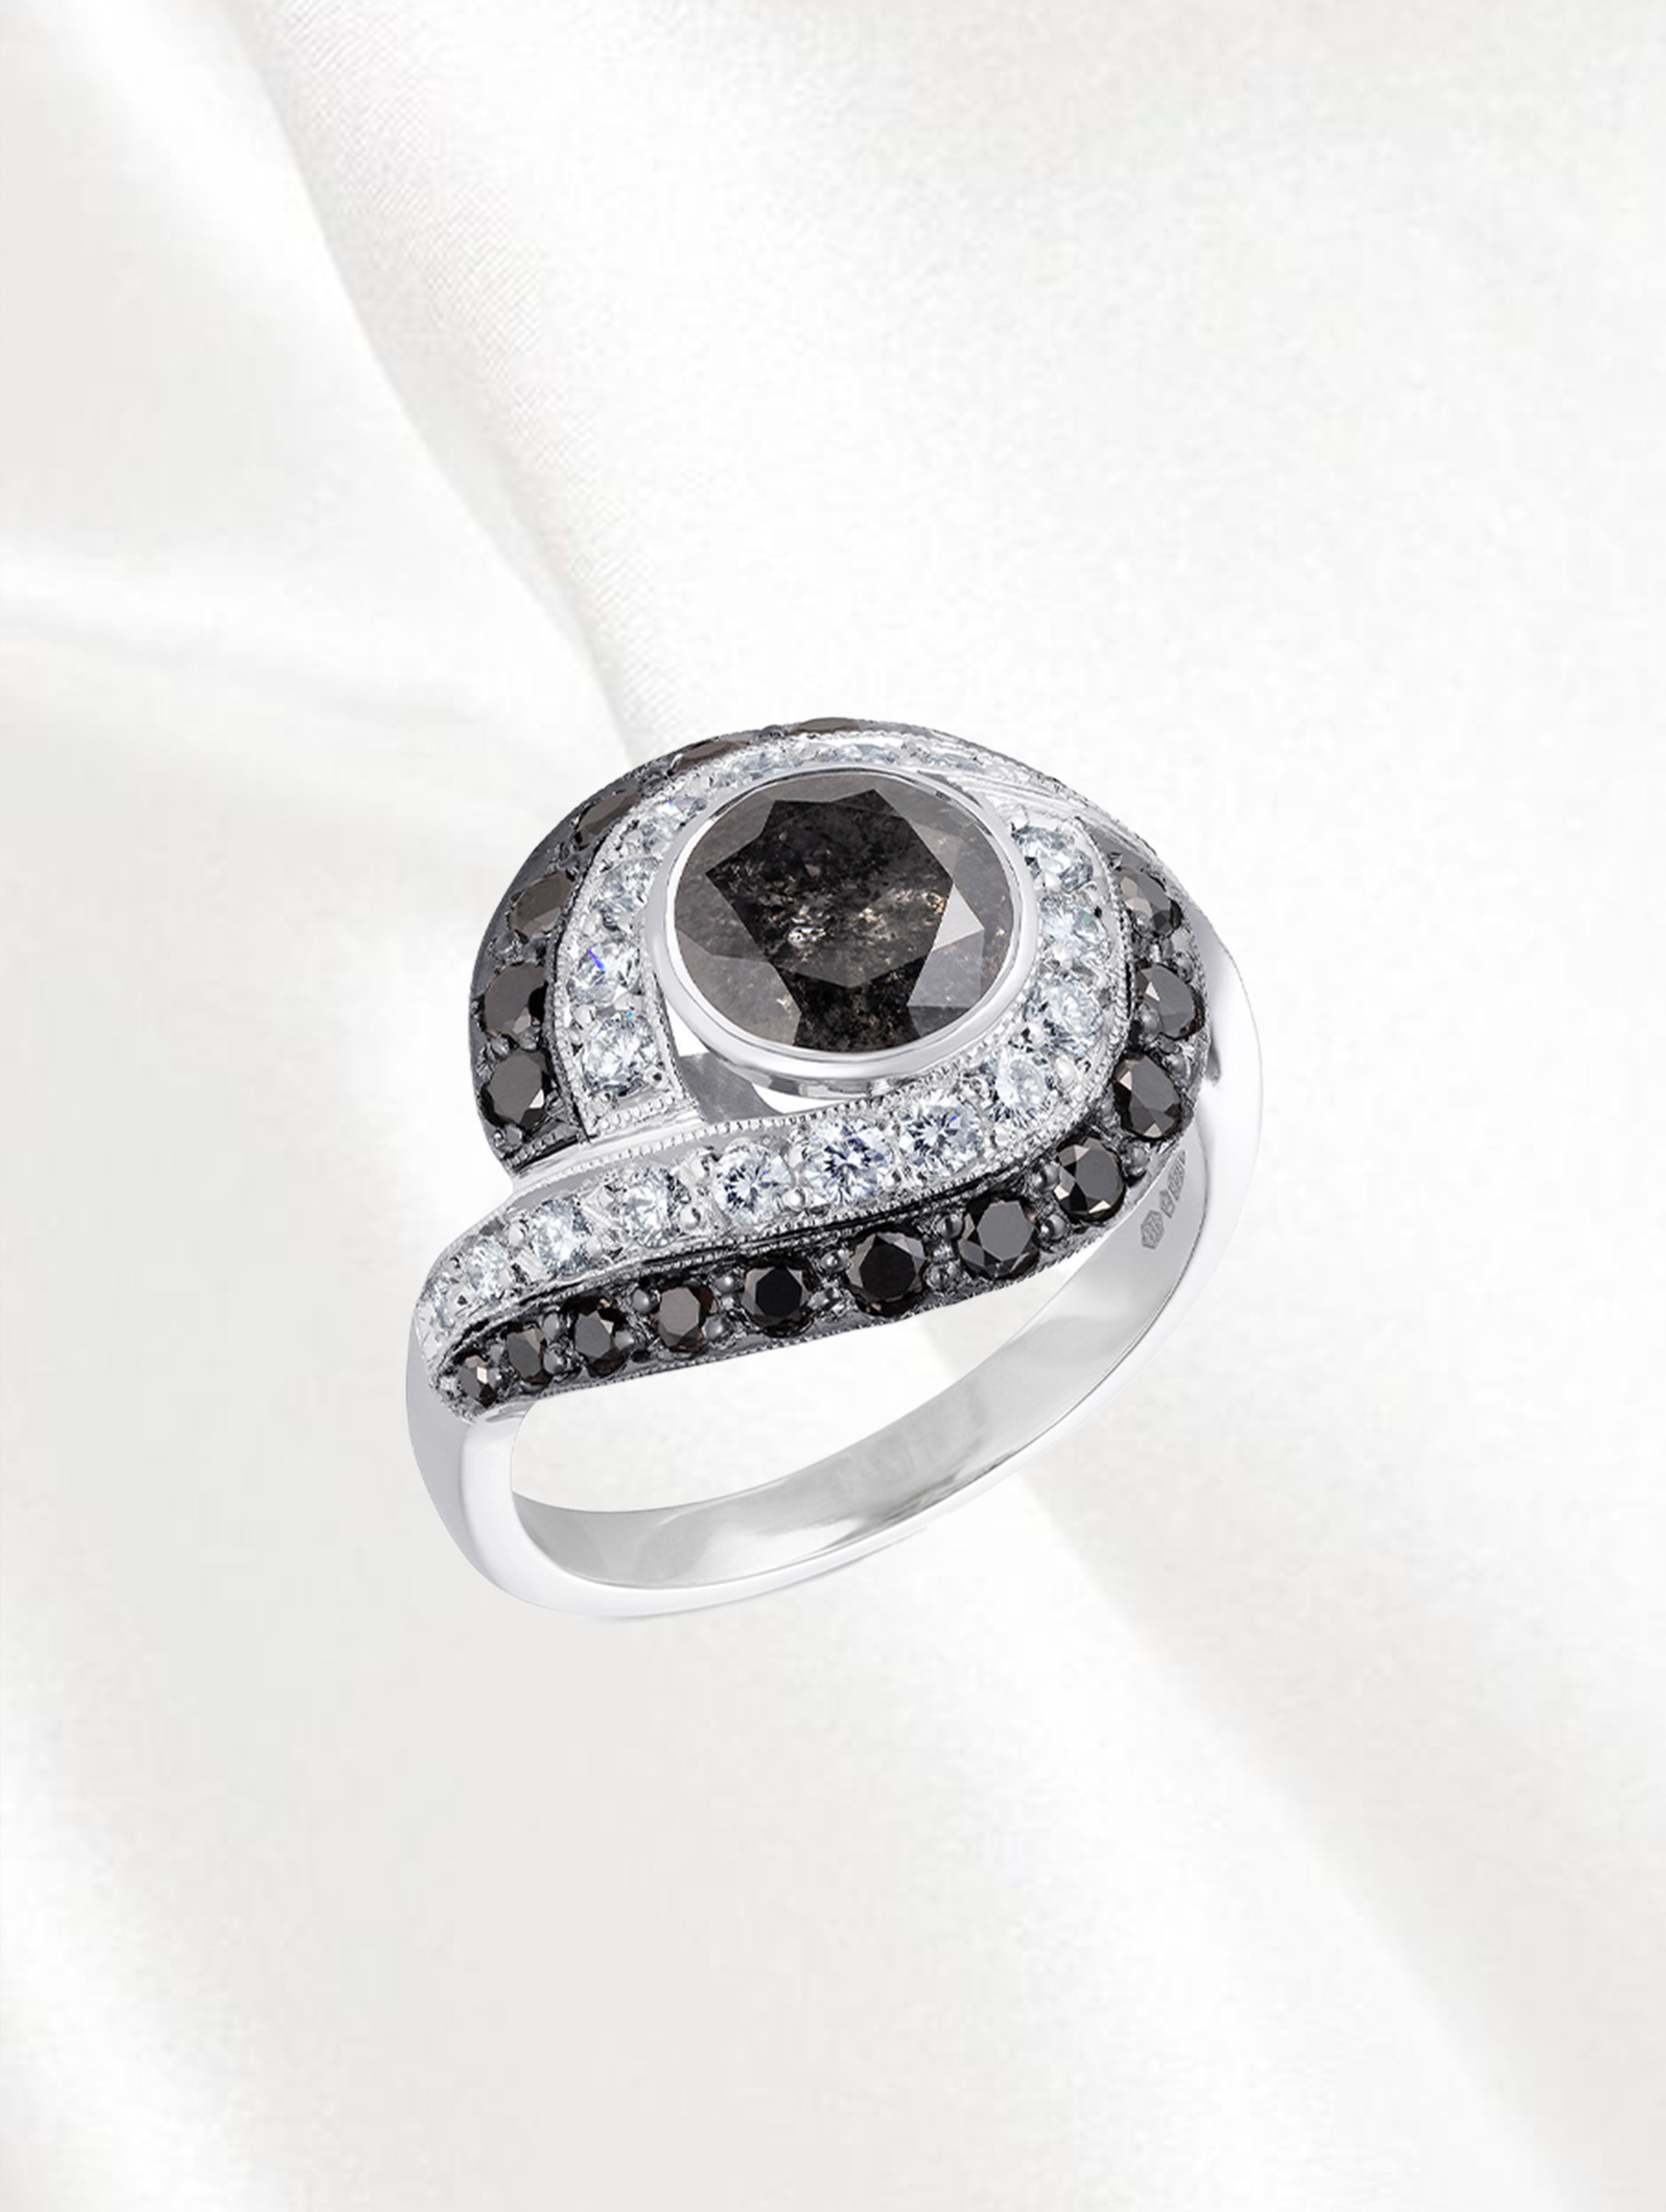 Black Diamond ring from Bear Brooksbank 